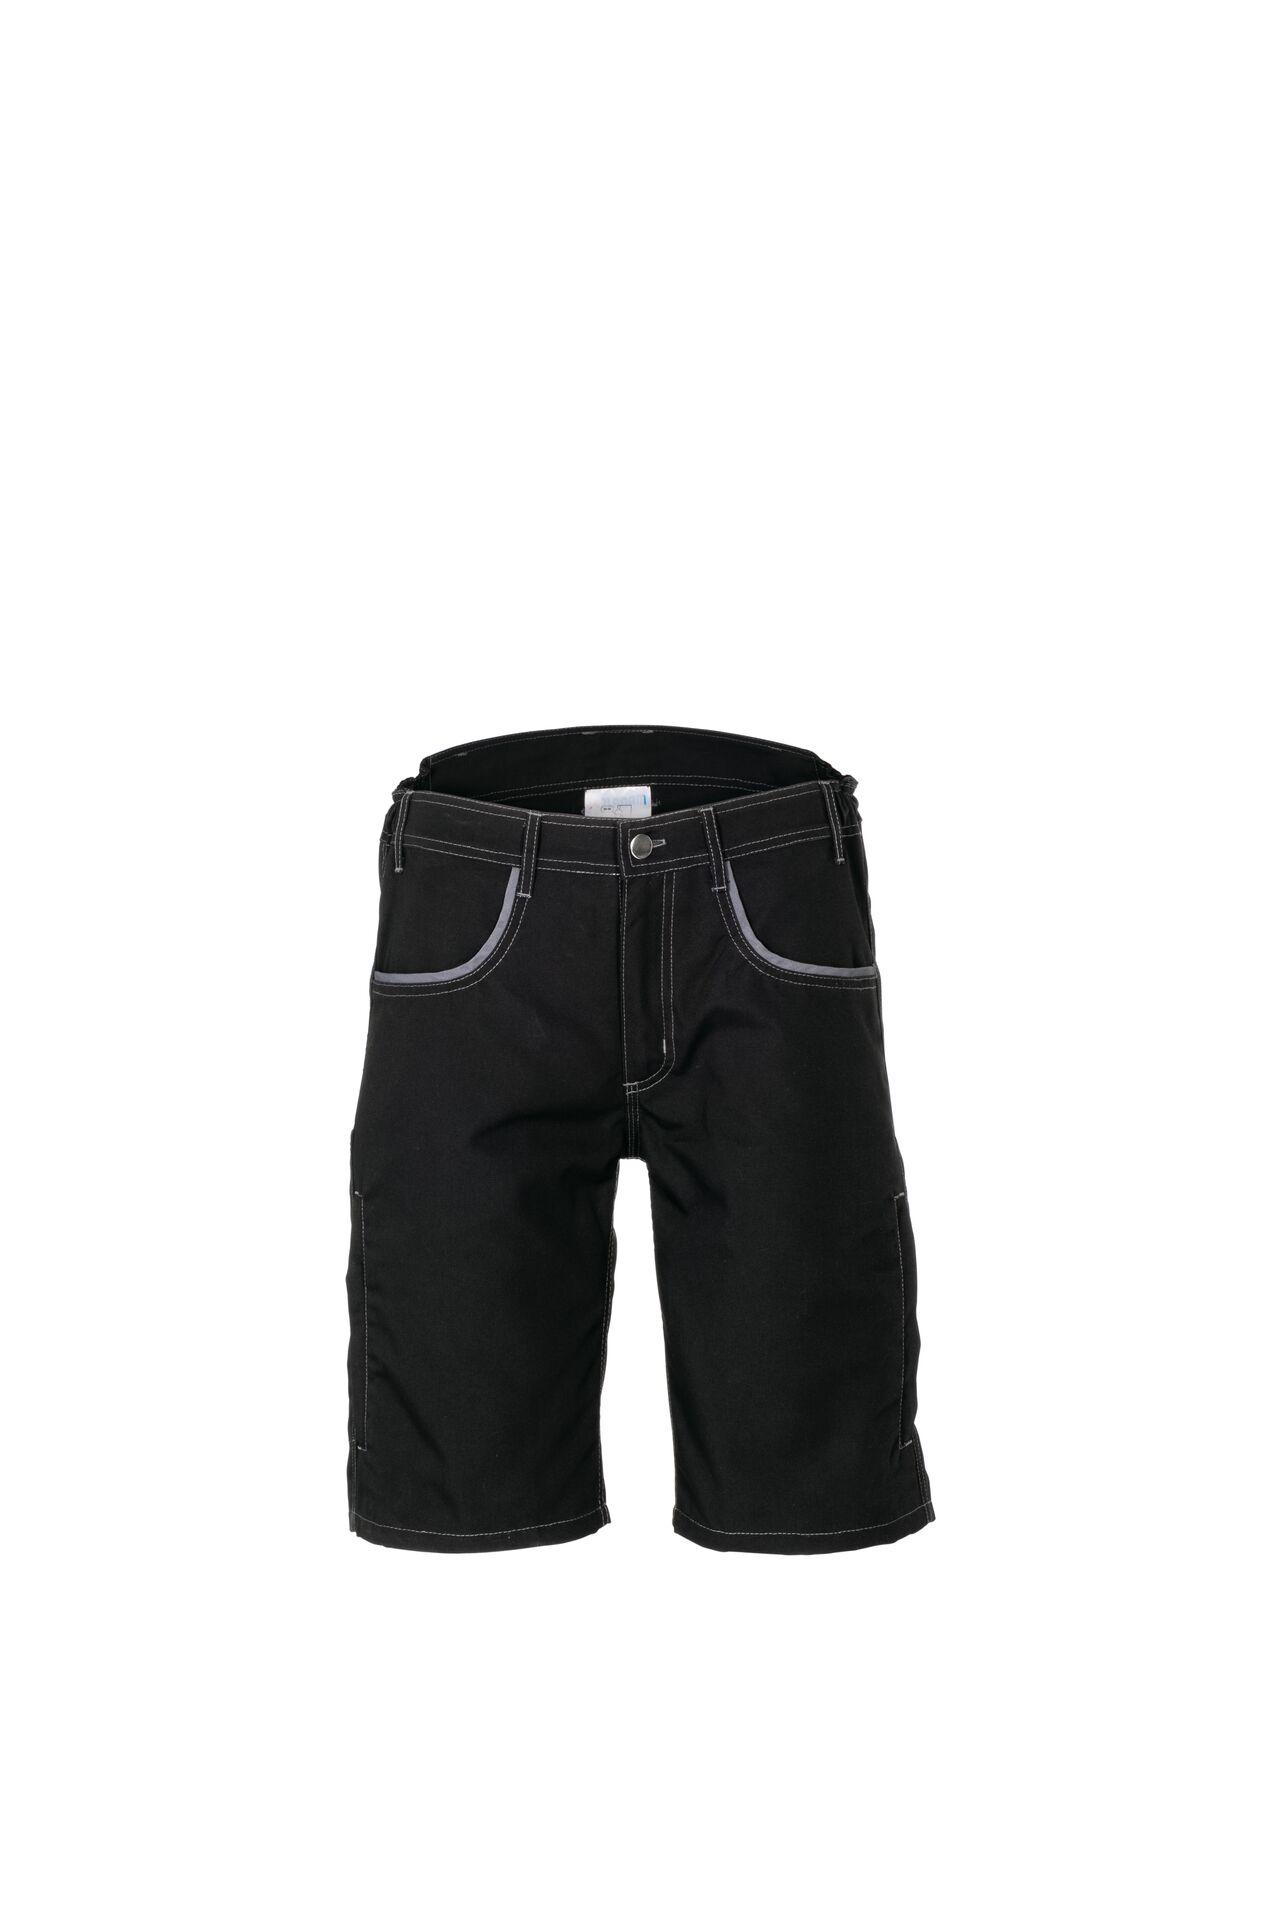 Planam® - DuraWork Shorts